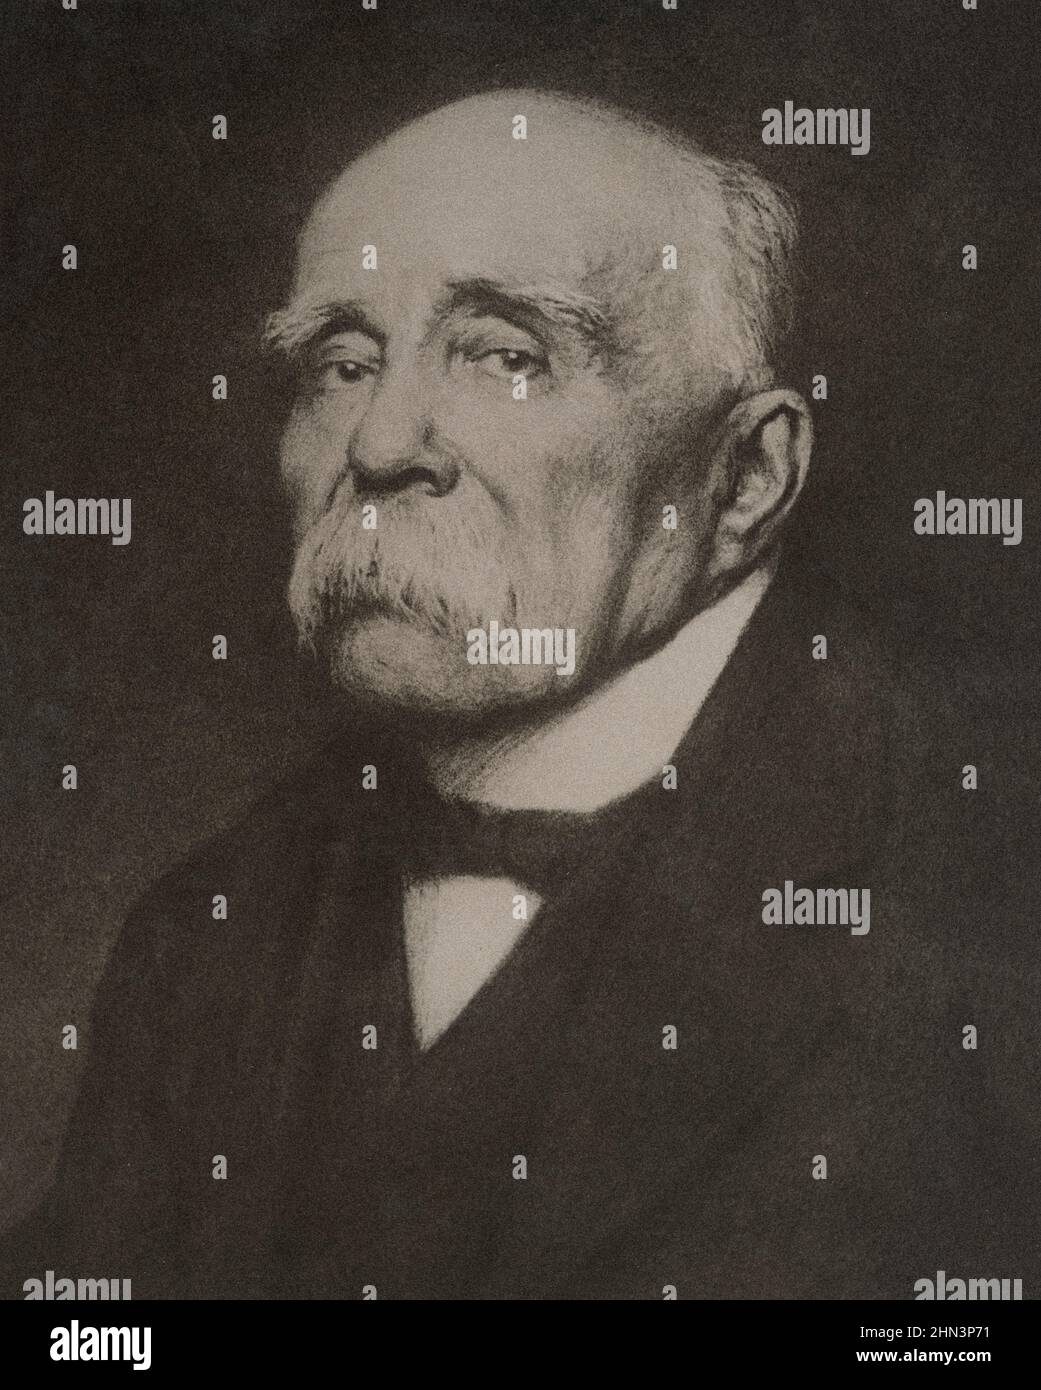 Retrato de Georges Clemenceau. Diciembre de 1918 Georges Eugène Benjamin Clemenceau (1841-1929) fue un estadista francés que sirvió como Primer Ministro del P. Foto de stock